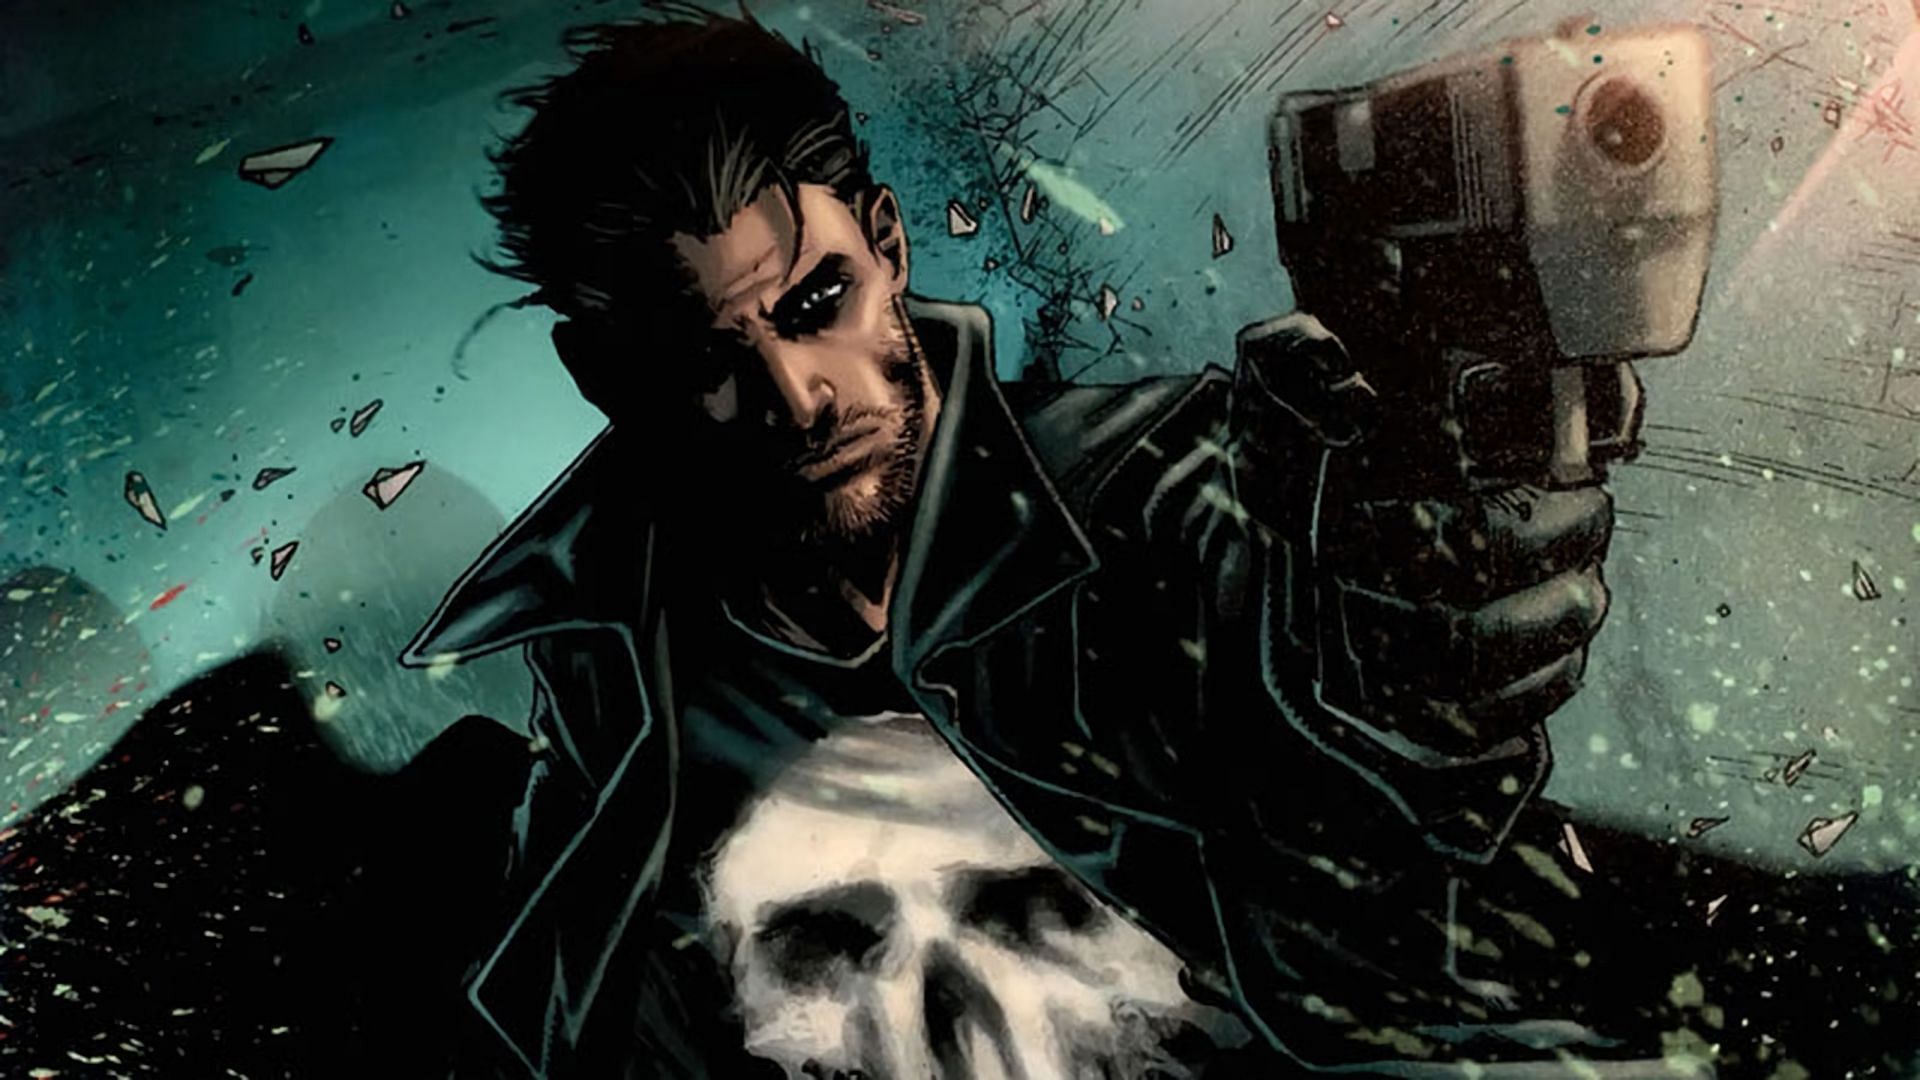 The Punisher (image via Marvel Comics)